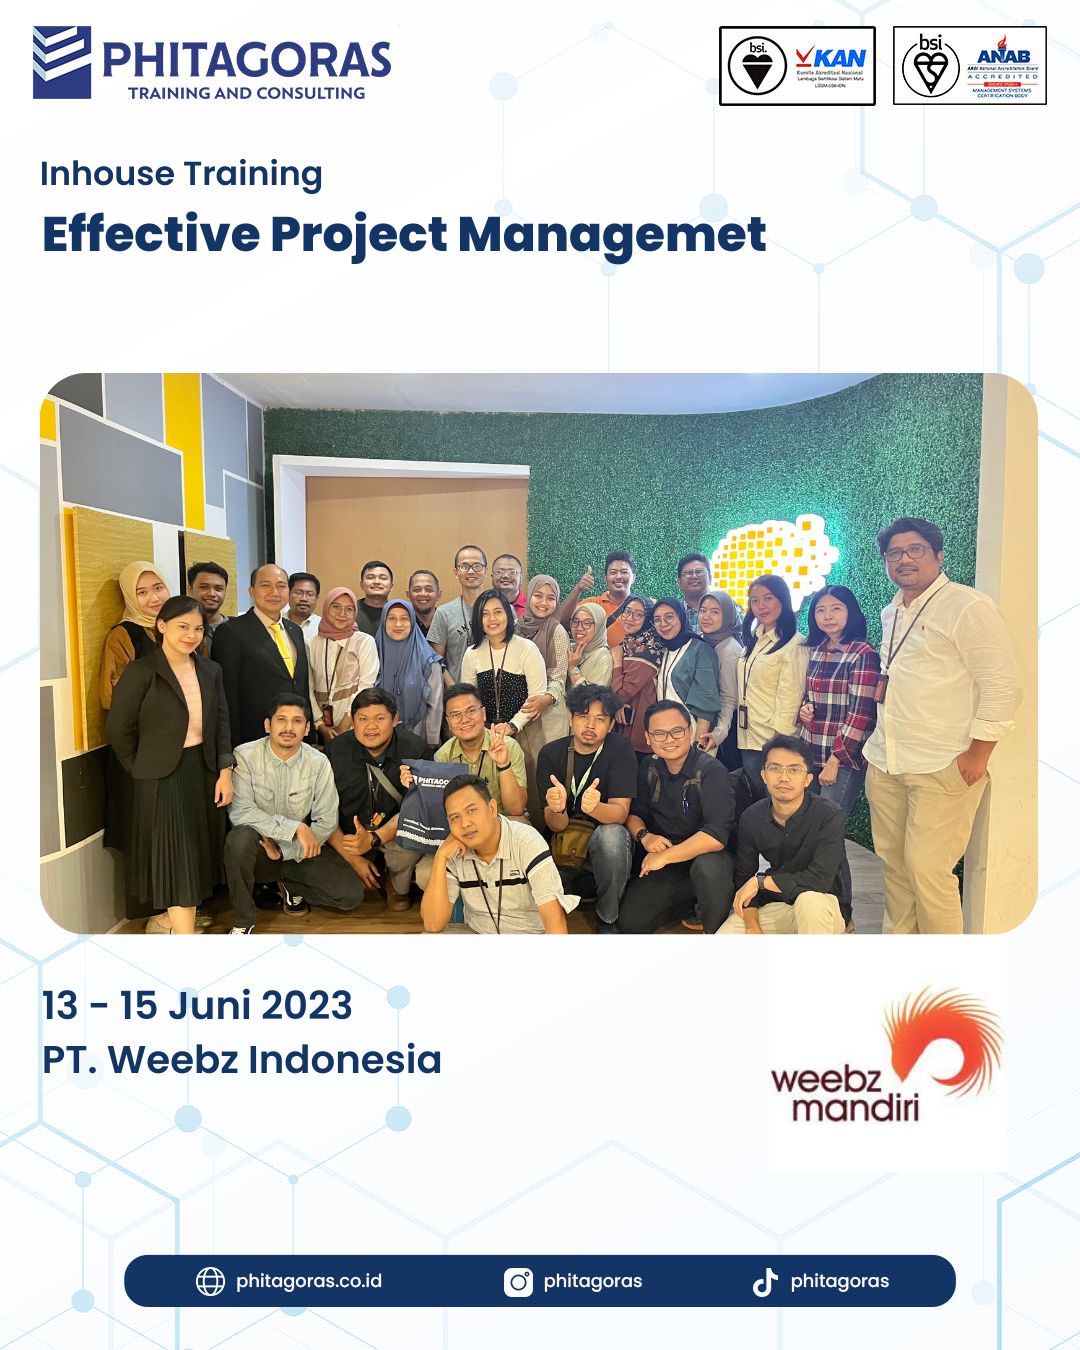 Inhouse Training Effective Project Managemet - PT. Weebz Indonesia